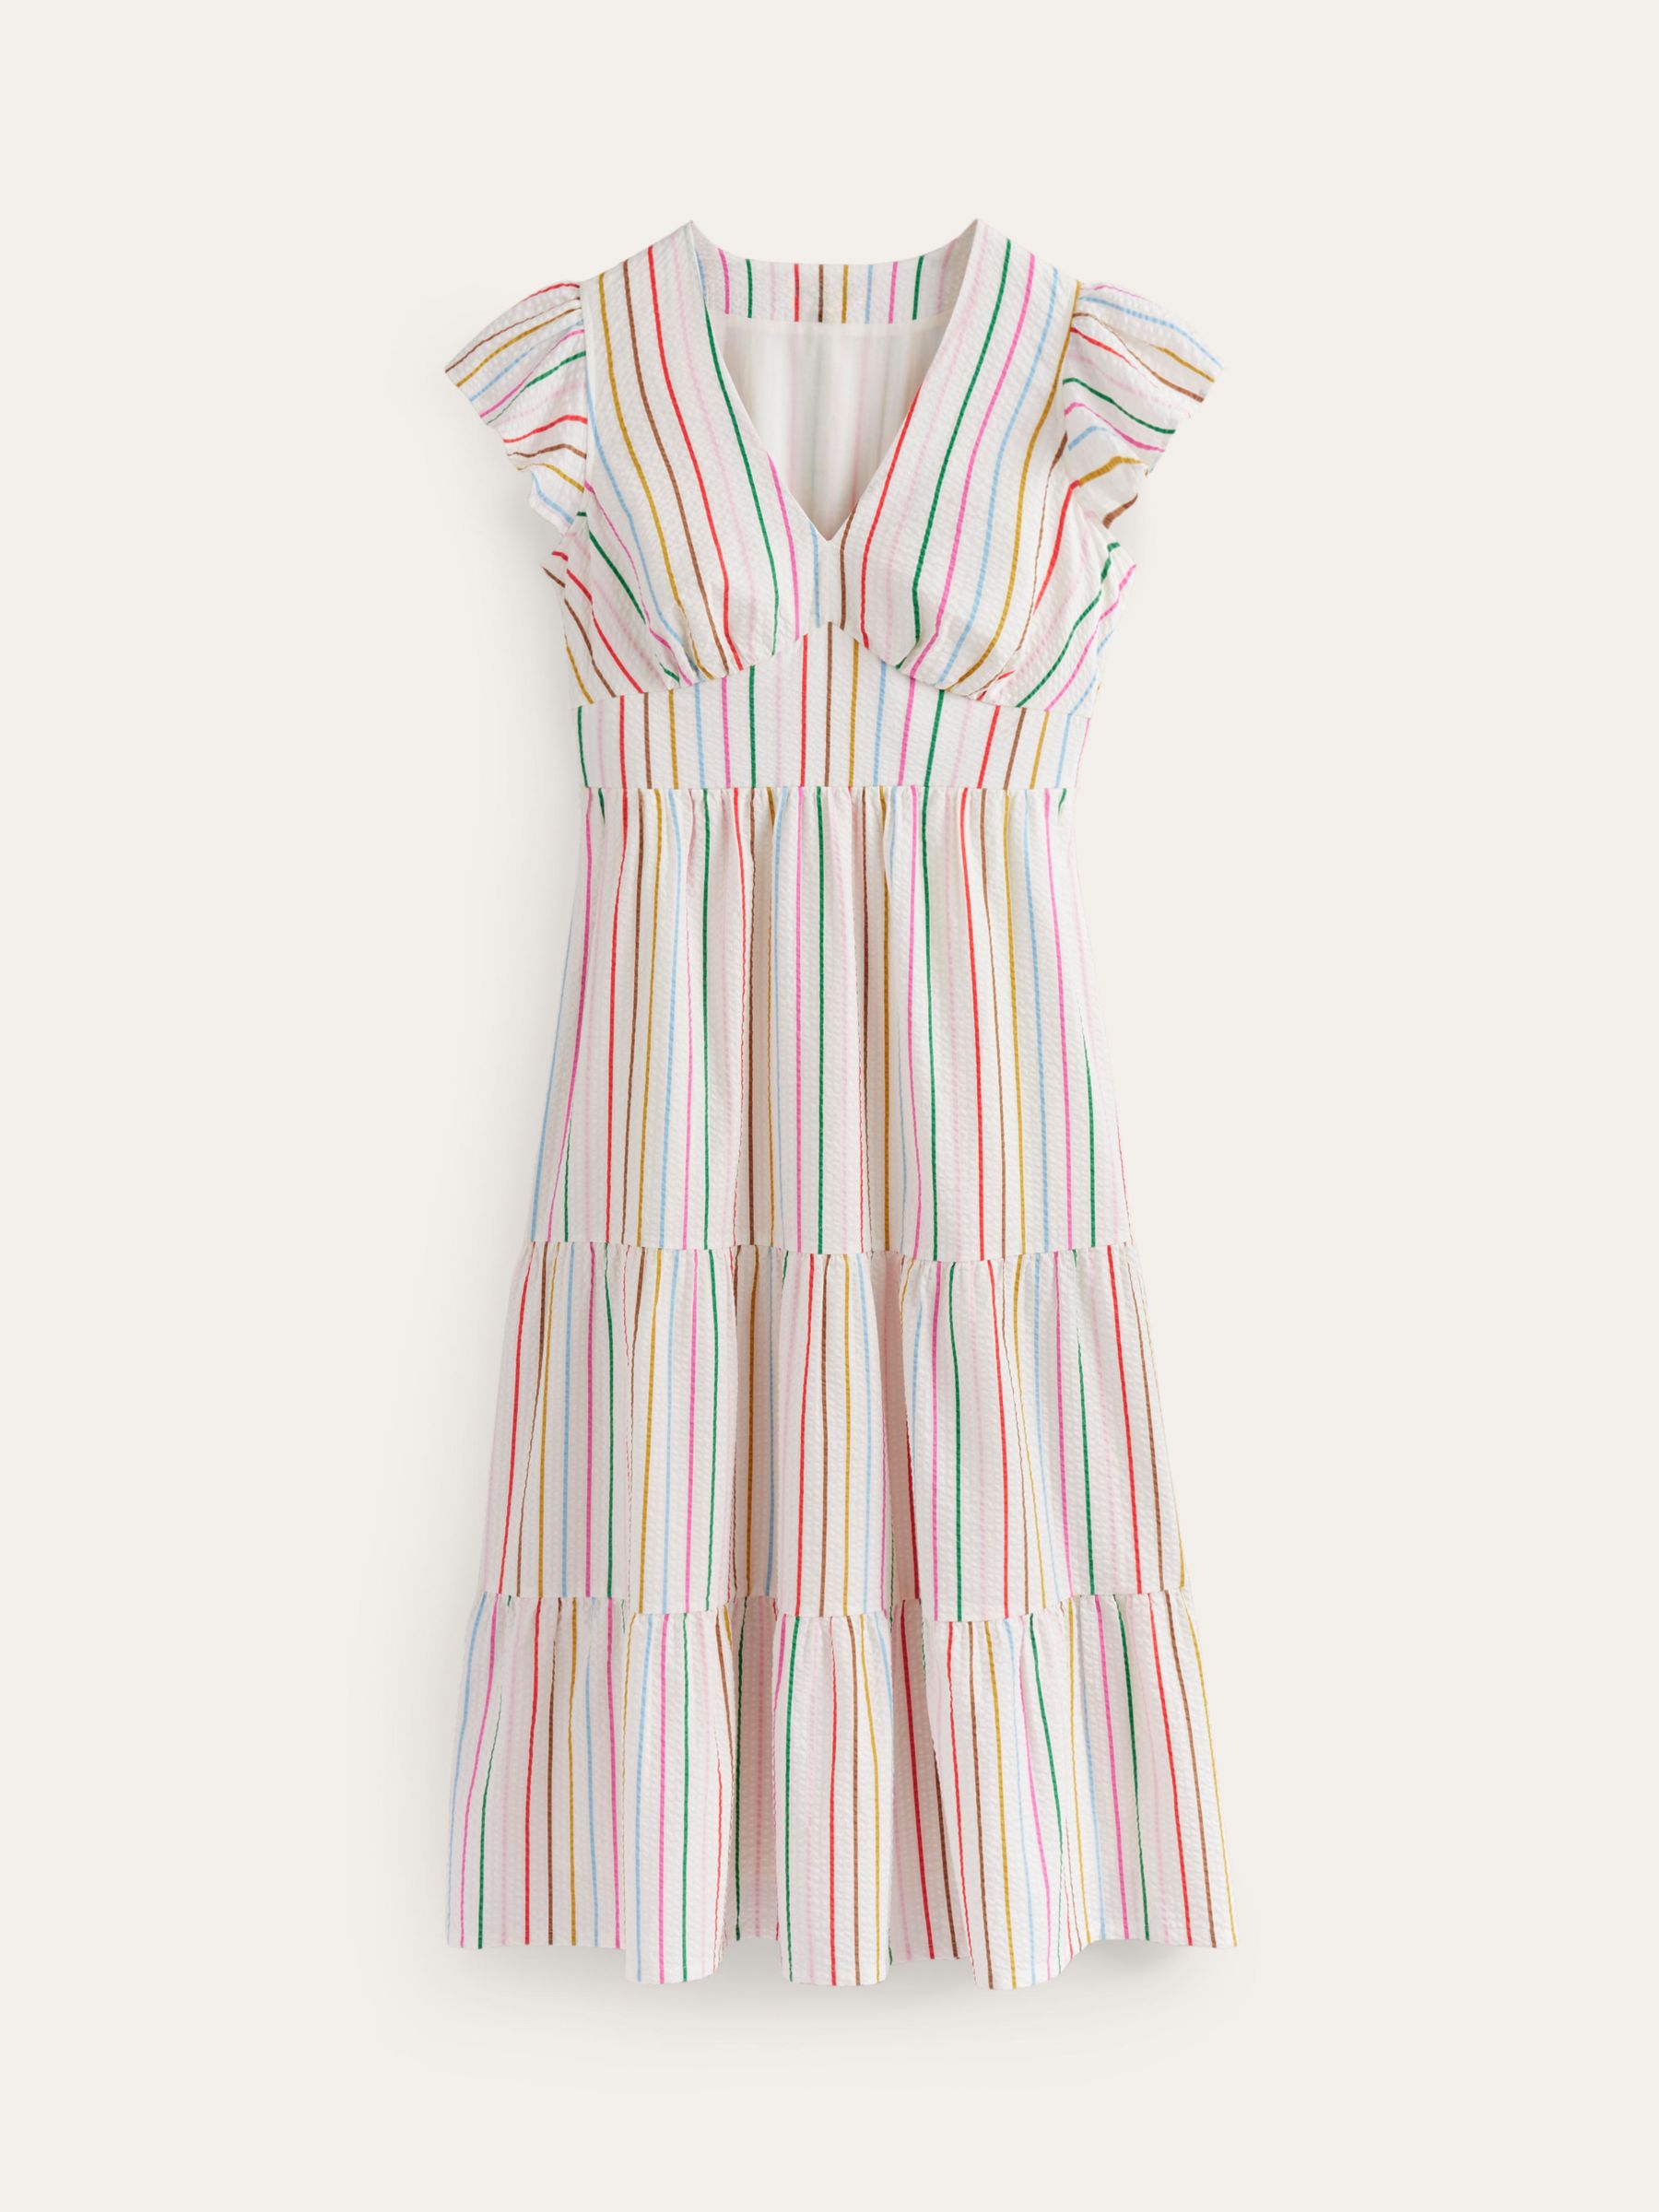 Boden May Rainbow Stripe Cotton Midi Dress, White/Multi, 8